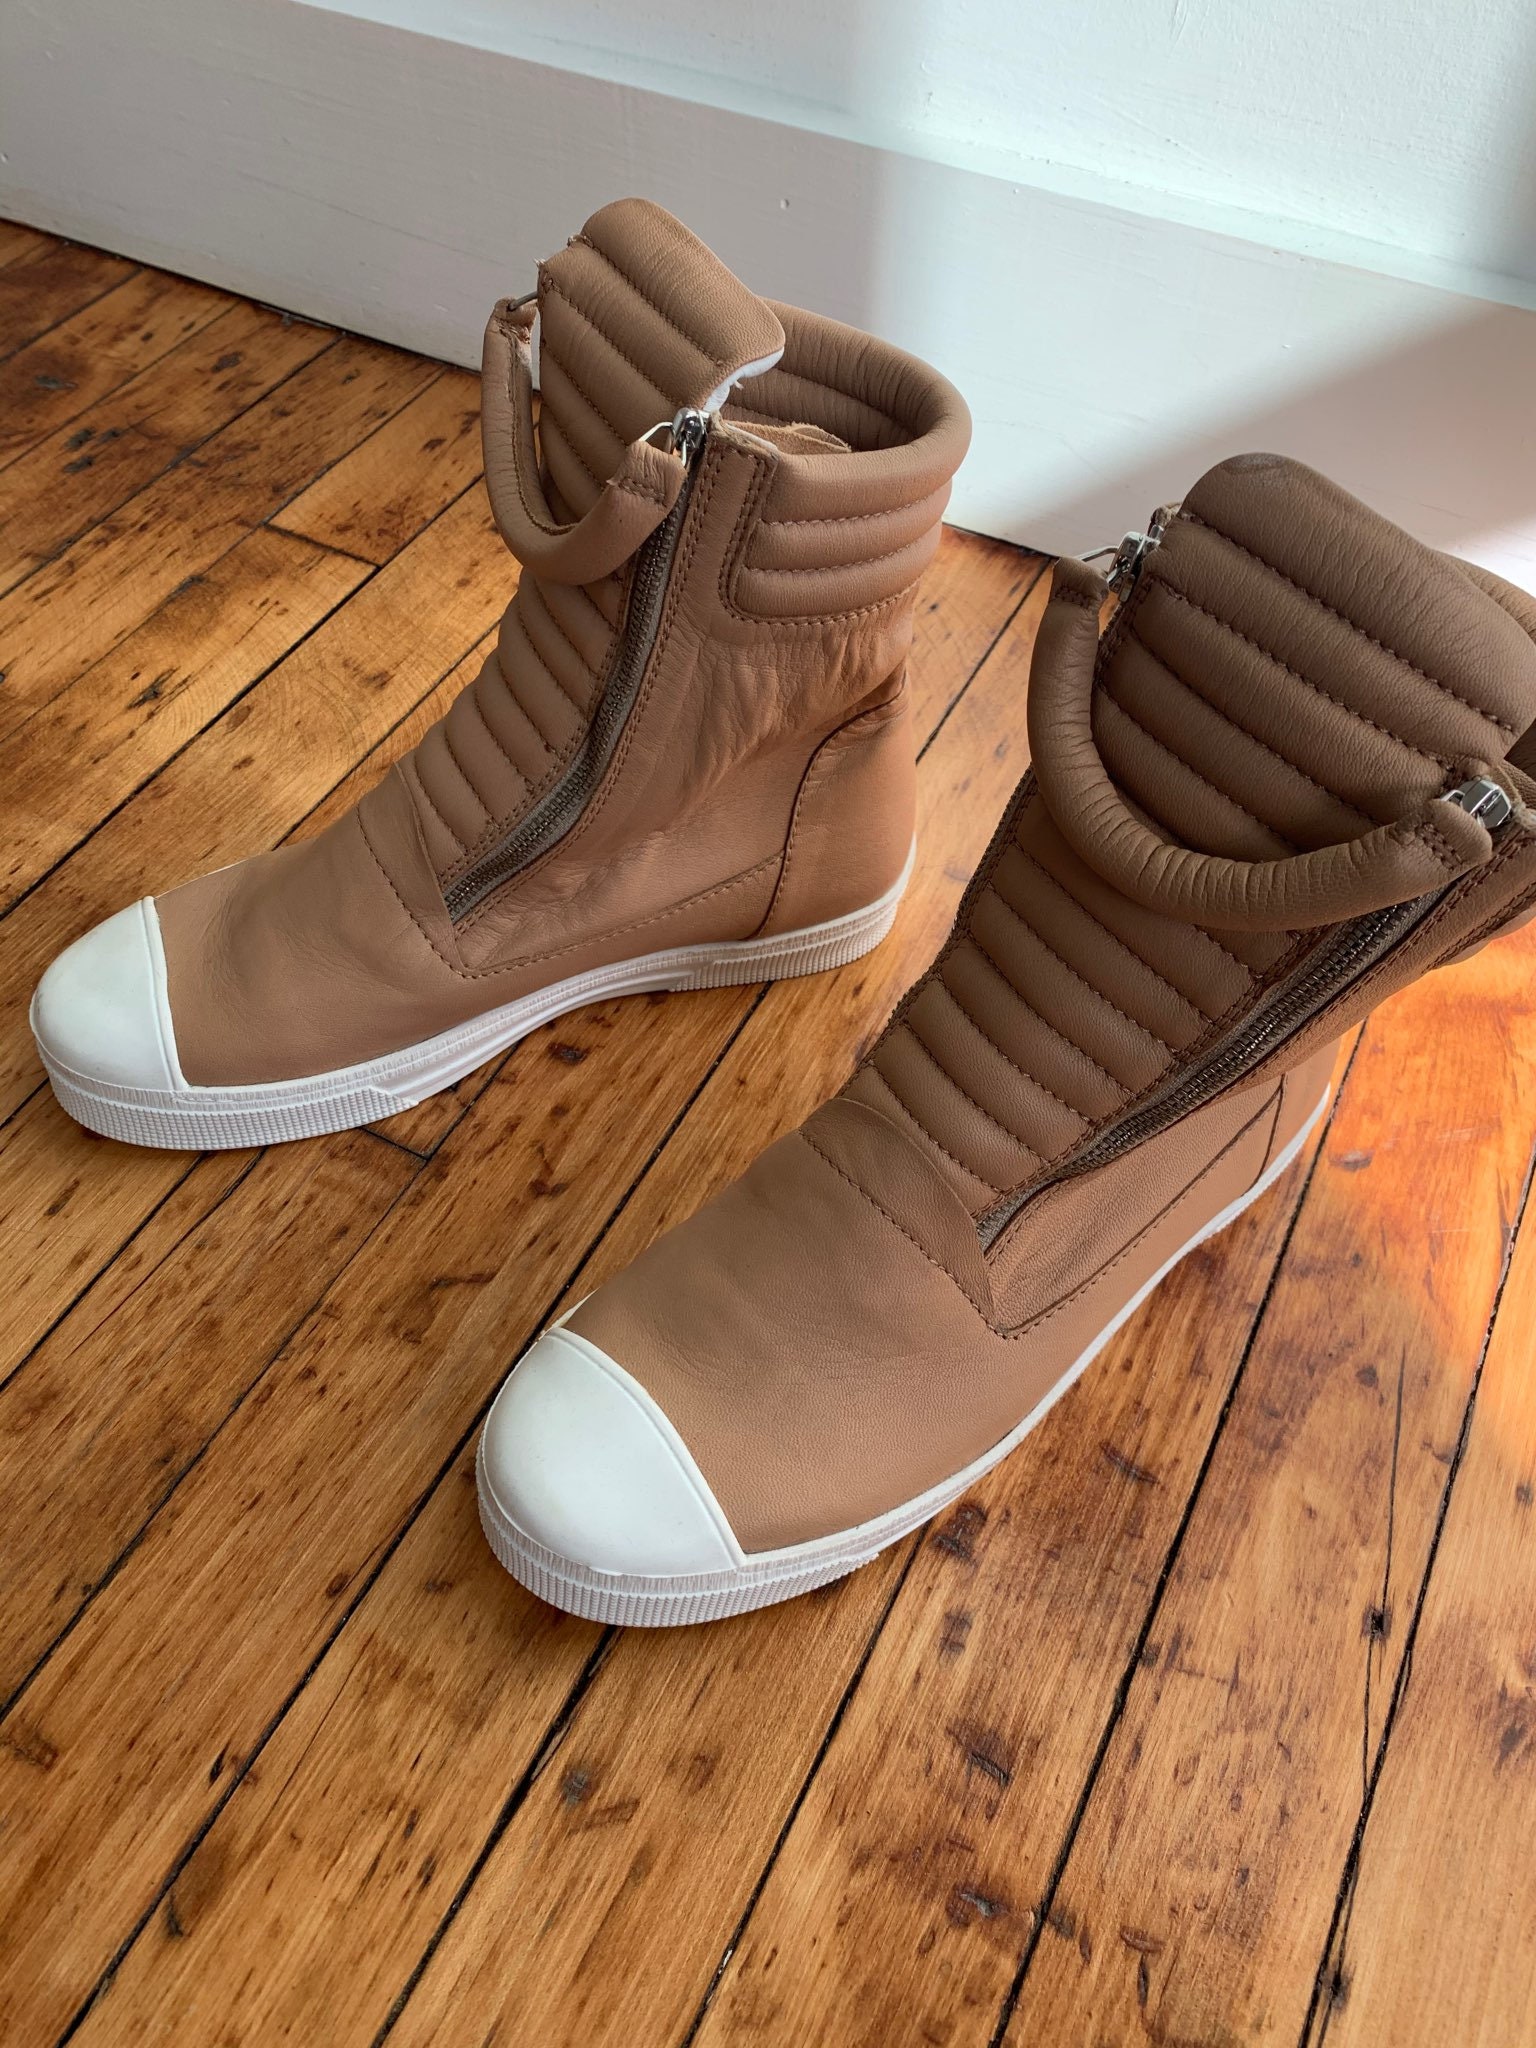 FINAL Leather Sneaker Platform Boots Winter Etsy